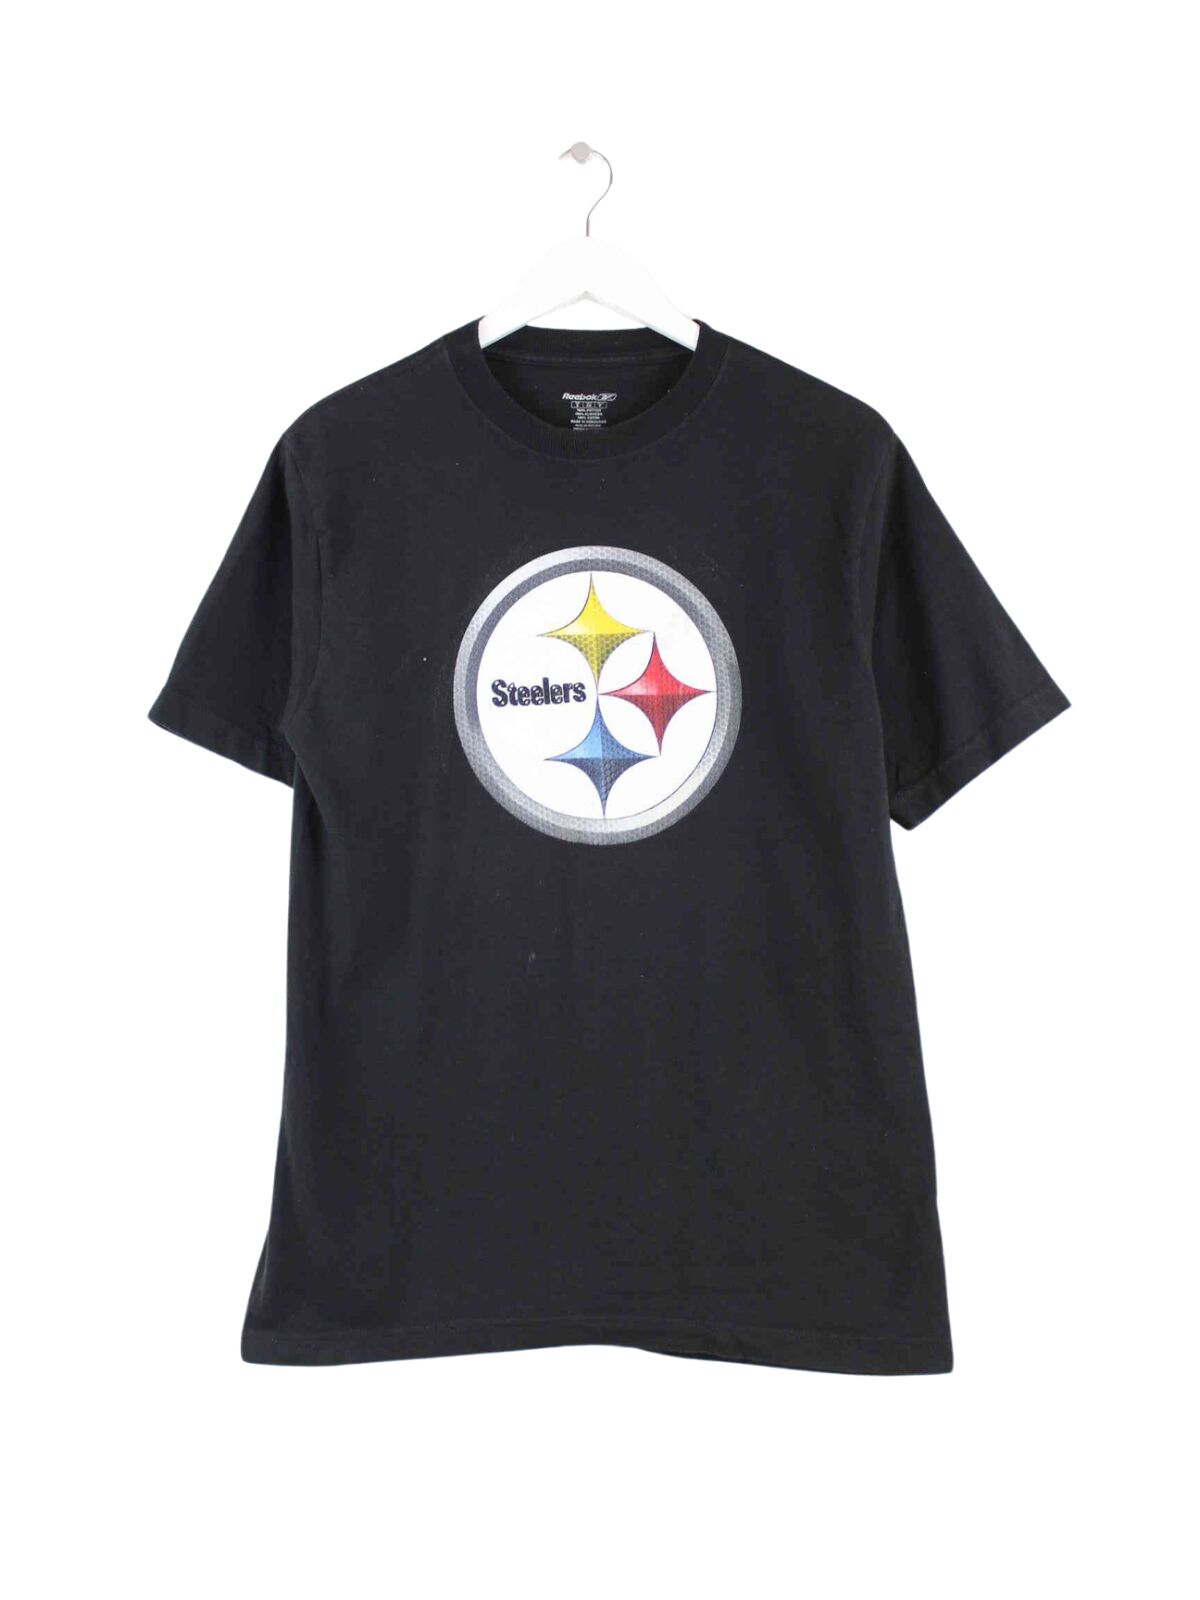 Reebok Steelers Print T-Shirt Schwarz S (front image)